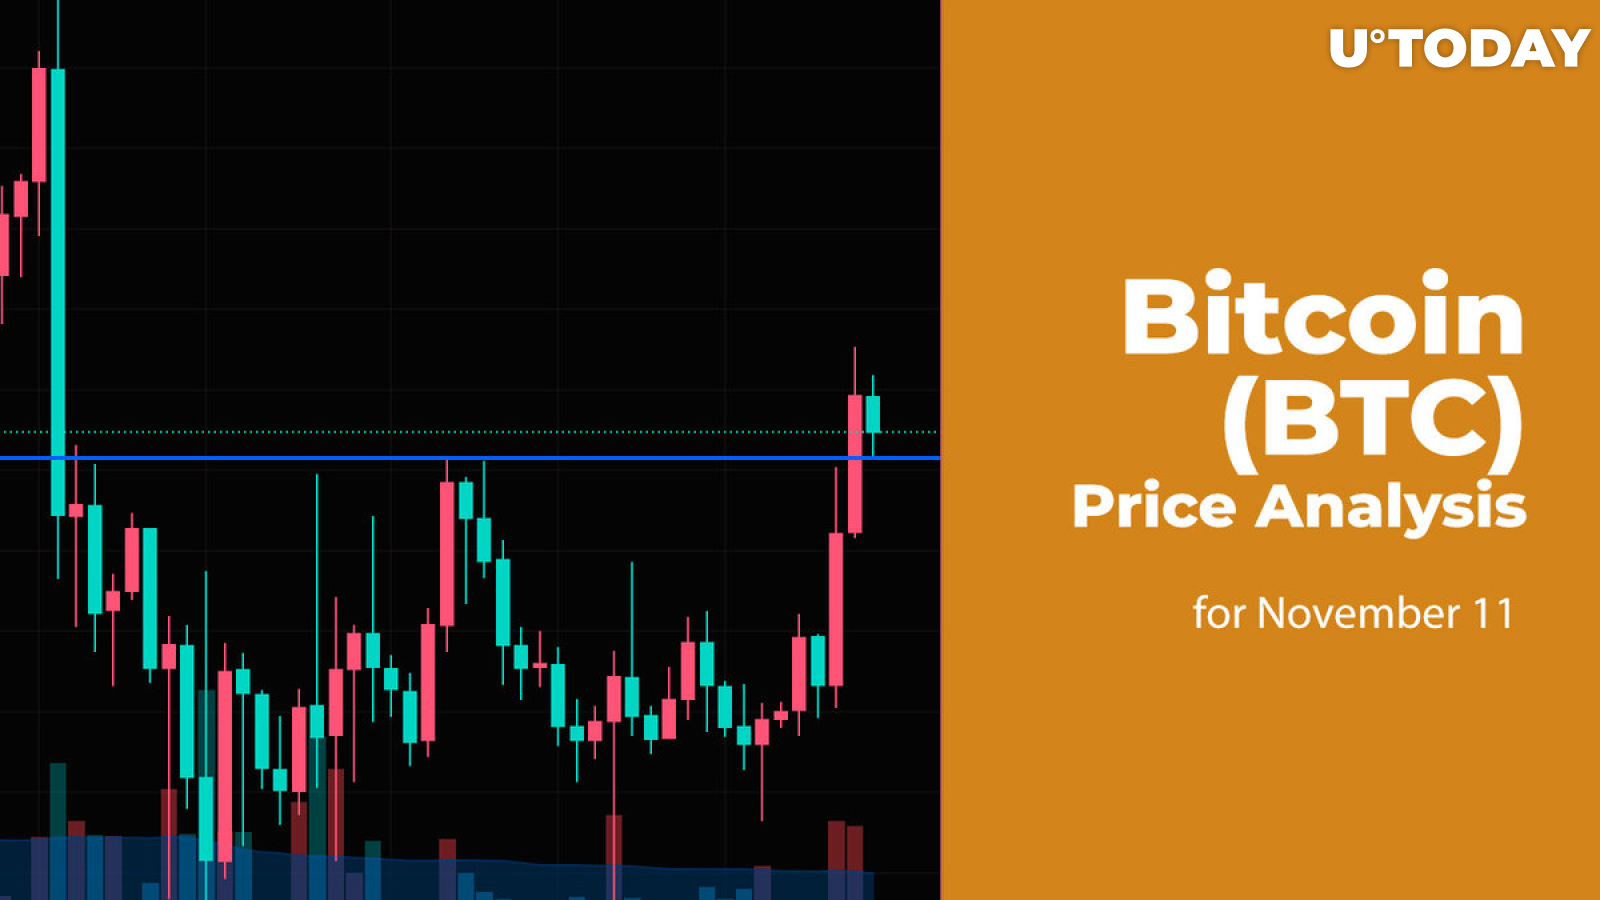 Bitcoin (BTC) Price Analysis for November 11